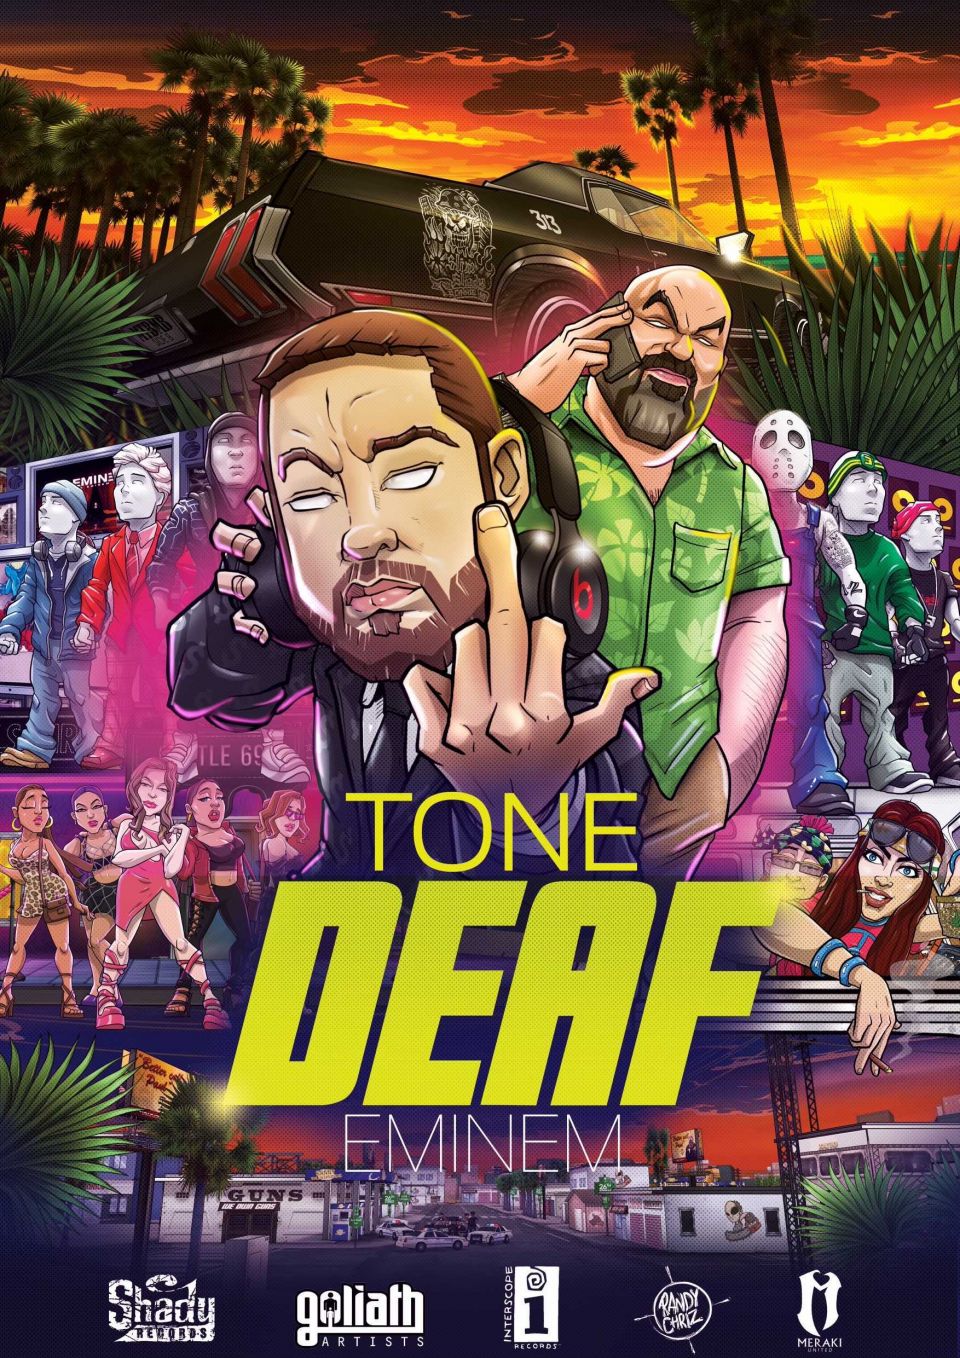 Eminem Tone Deaf Reviews Album Of The Year